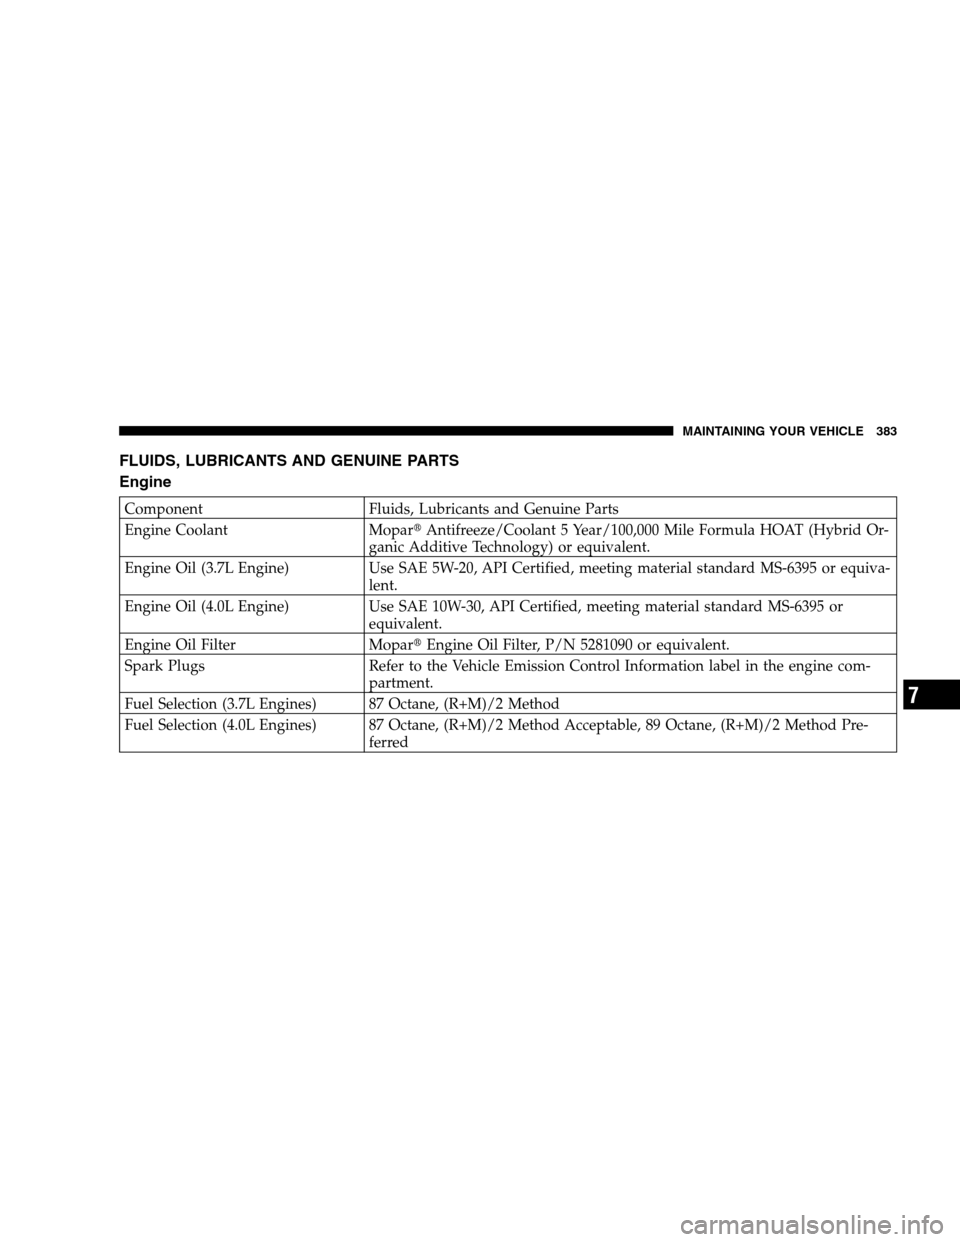 DODGE NITRO 2007 1.G User Guide FLUIDS, LUBRICANTS AND GENUINE PARTS
Engine
Component Fluids, Lubricants and Genuine Parts
Engine Coolant MoparAntifreeze/Coolant 5 Year/100,000 Mile Formula HOAT (Hybrid Or-
ganic Additive Technolog